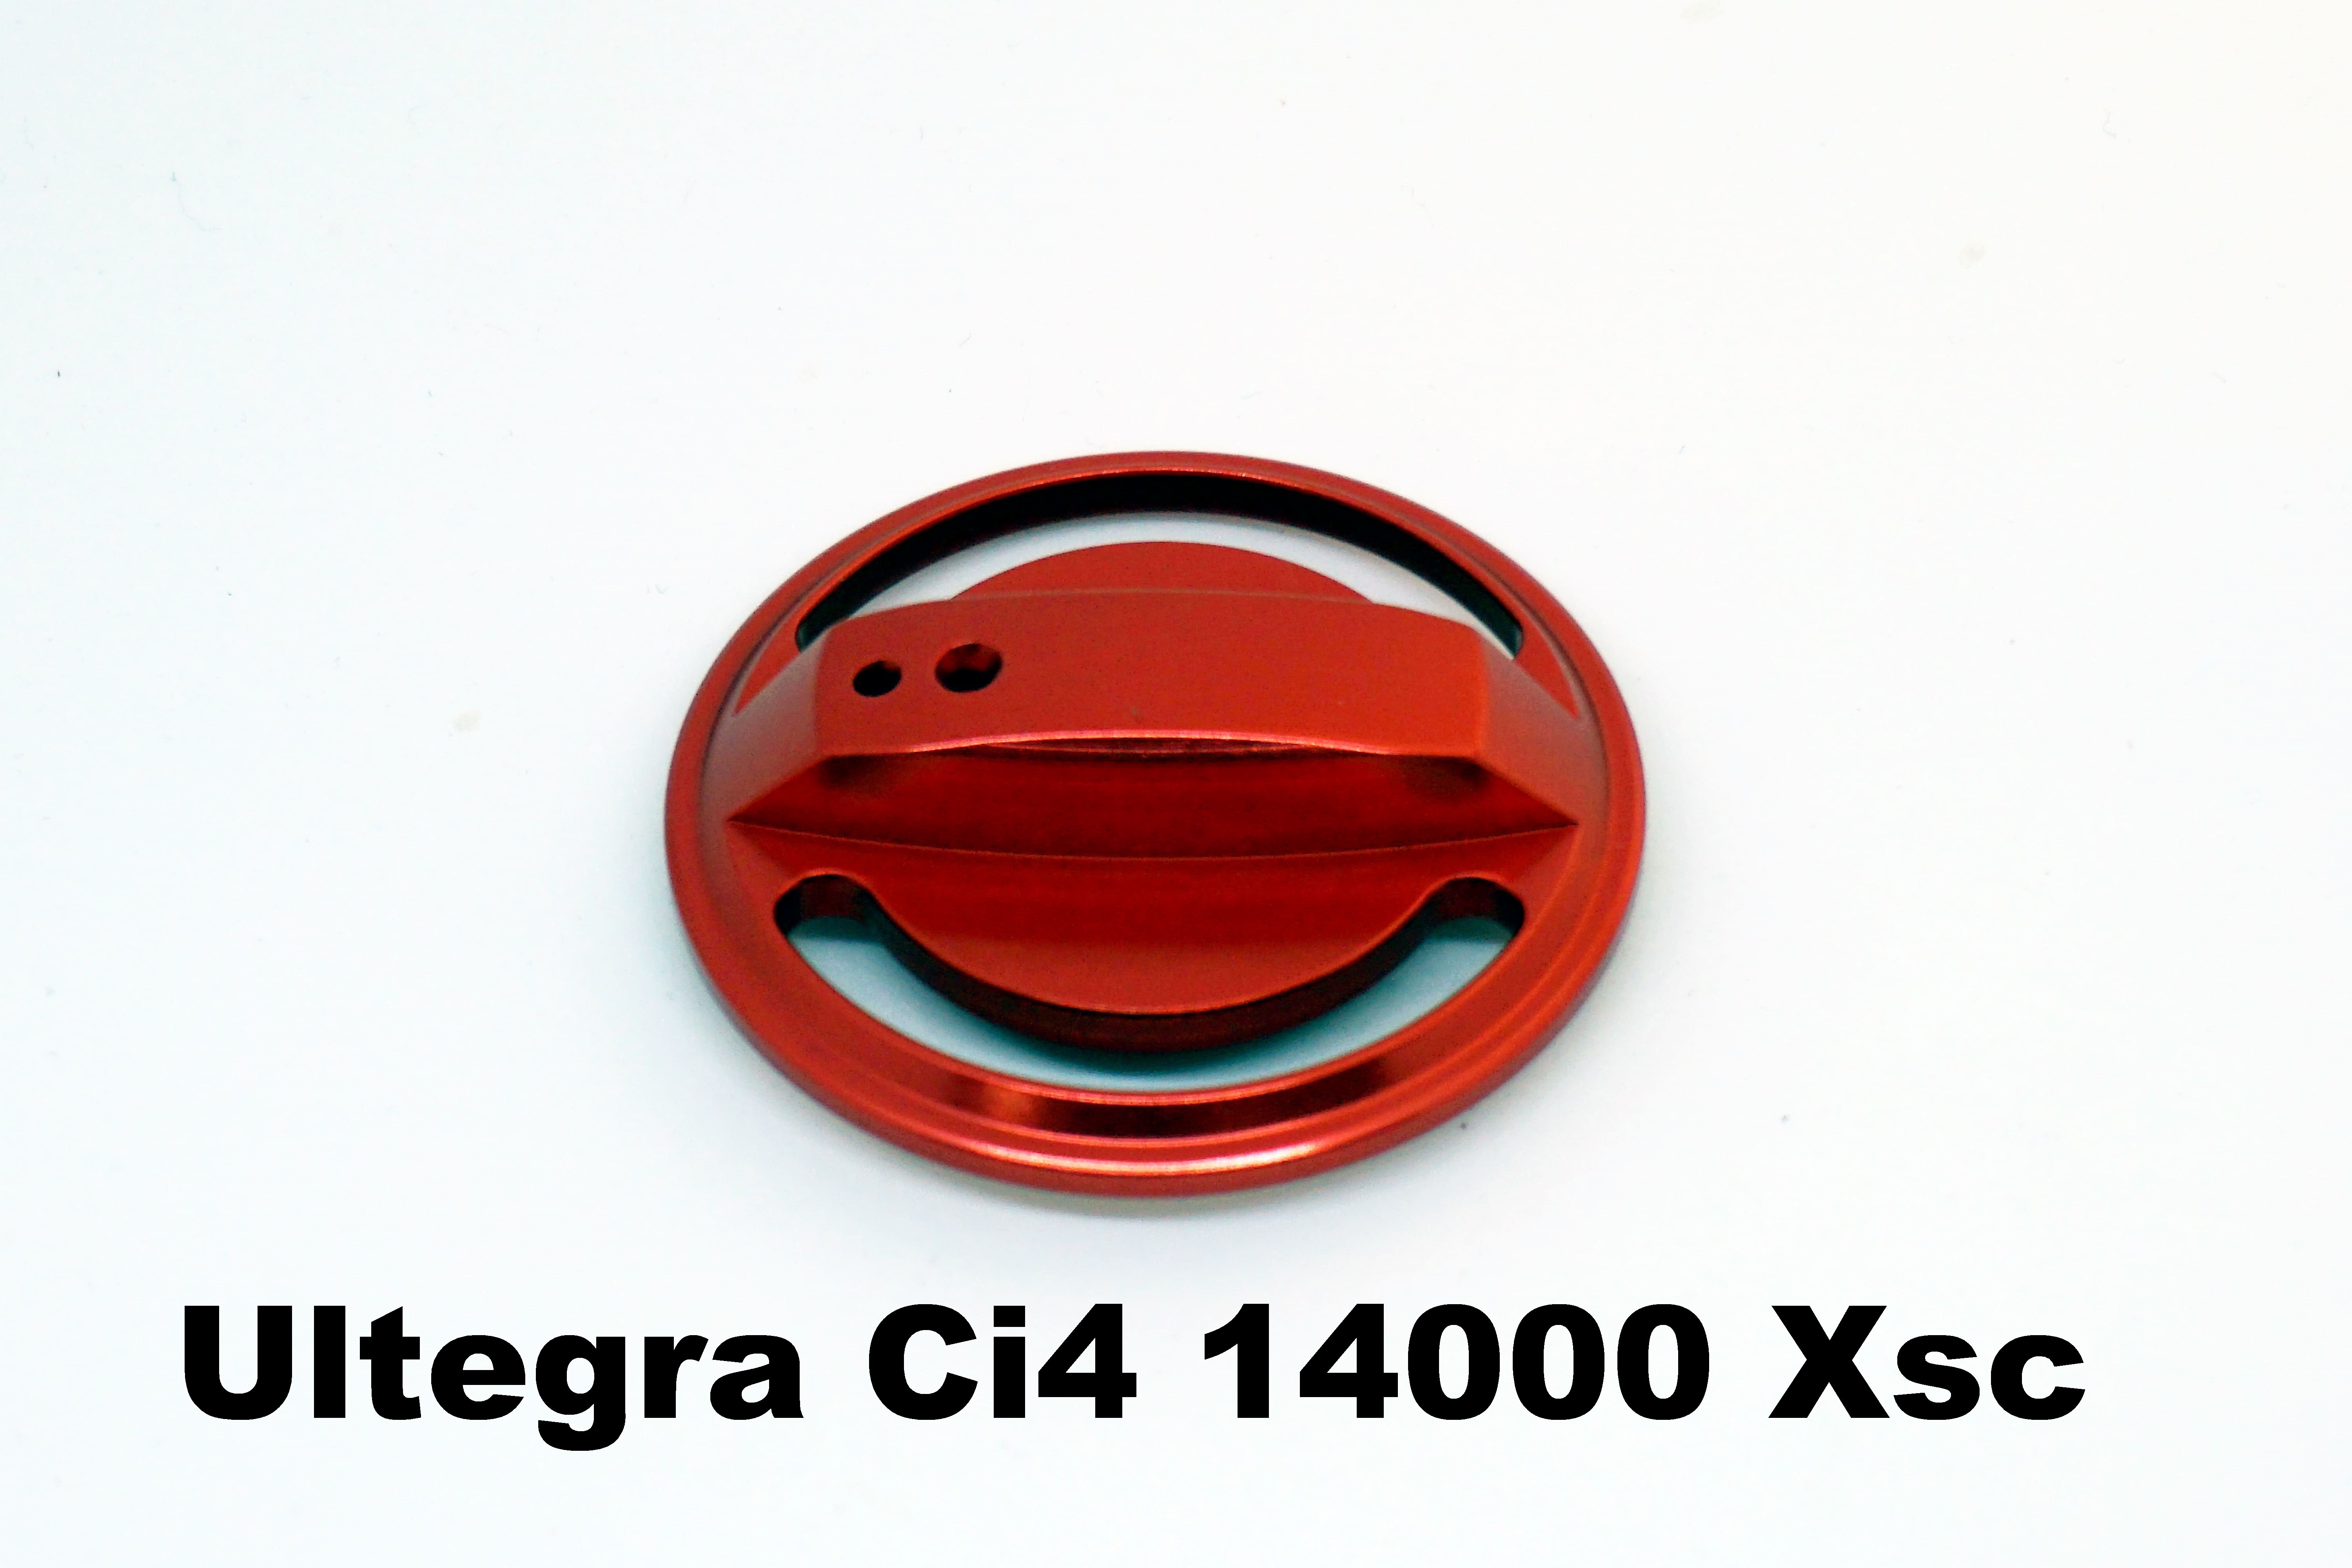 Bremsenknopf für Brandungsrolle Ultegra Ci4 14000 Xsc